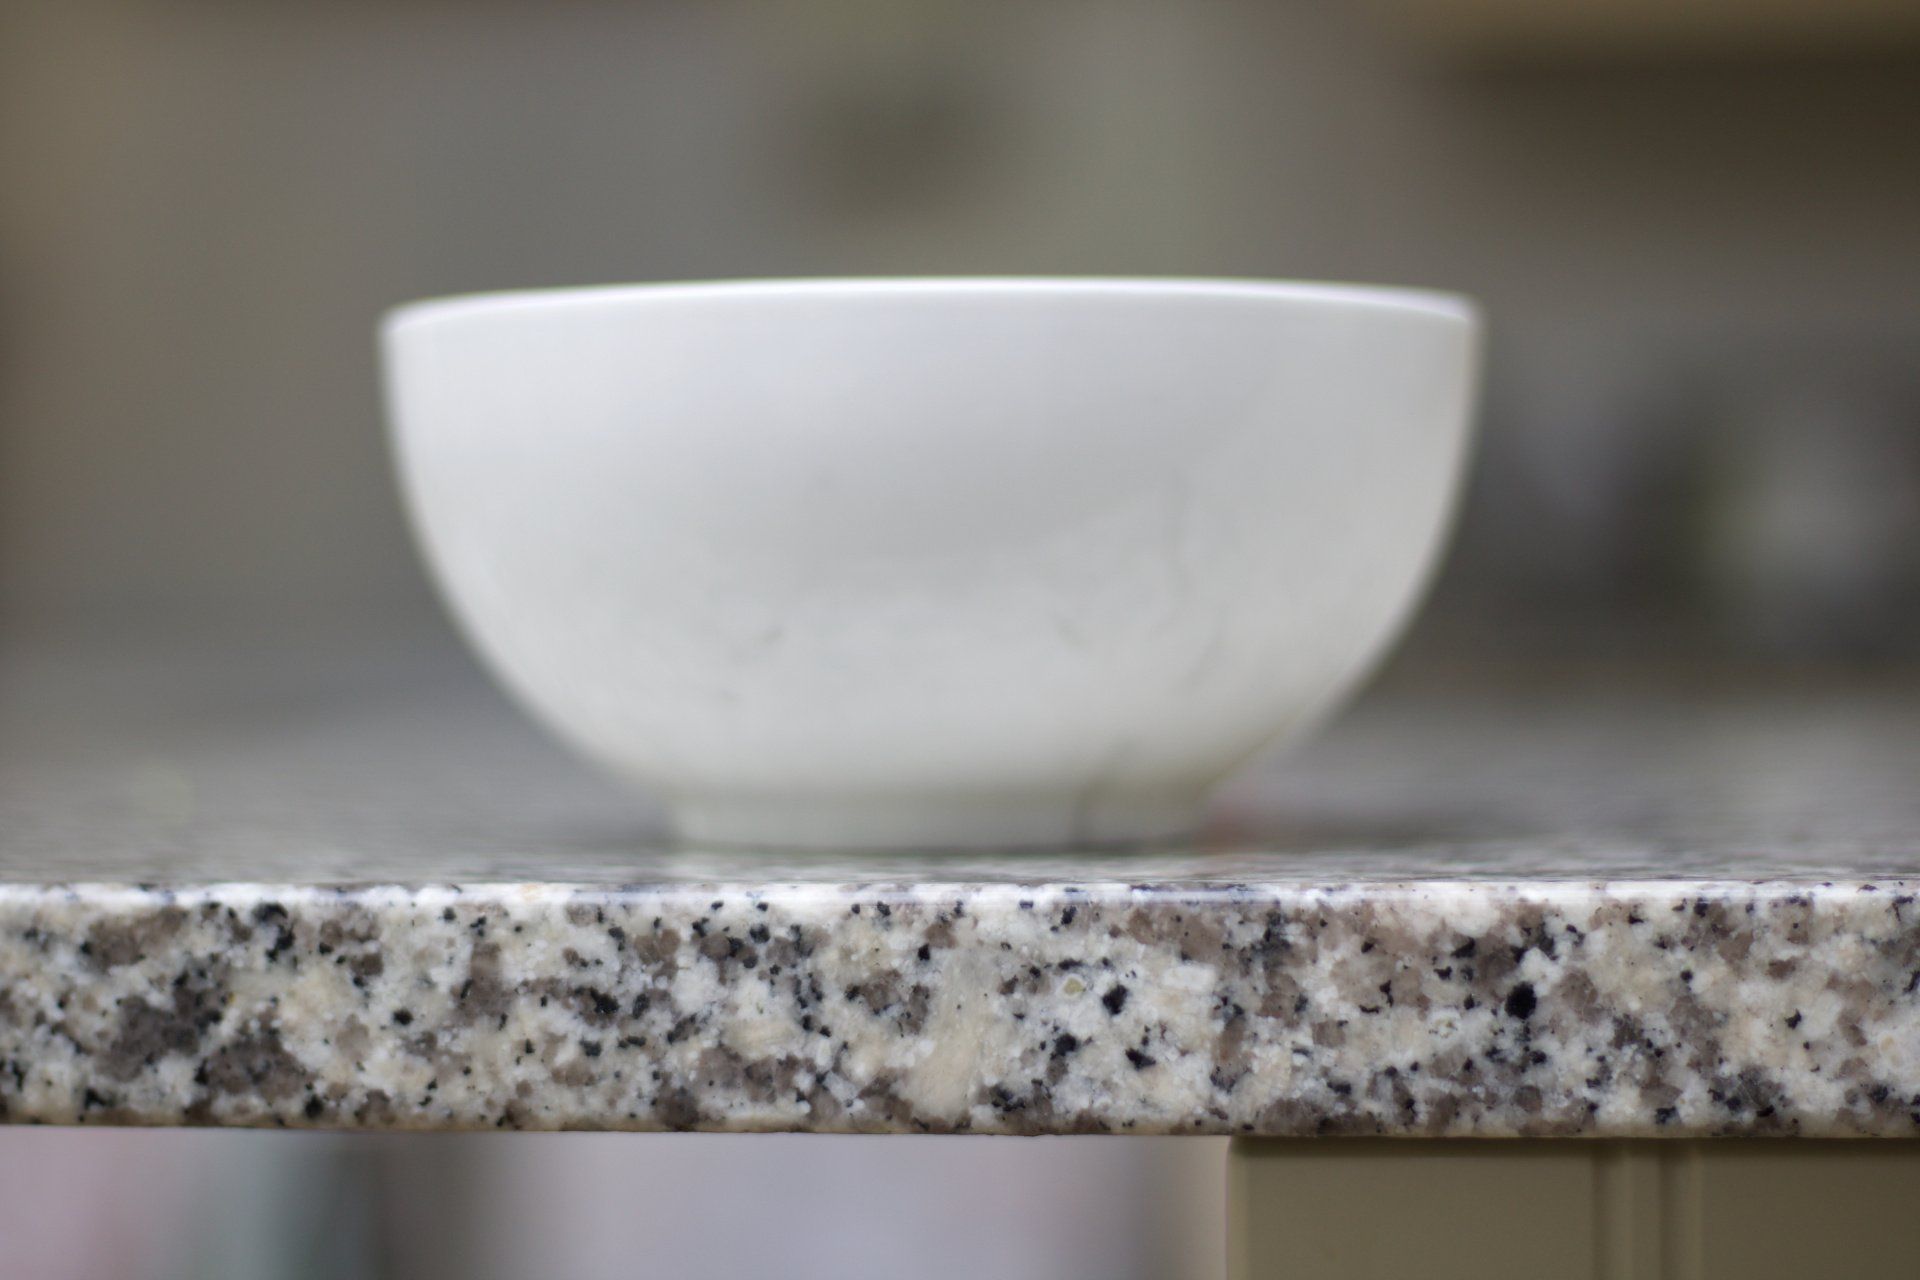 Eased Edge, Edge Profile for Kitchen and Bathroom, ROyal Granite Countertops.